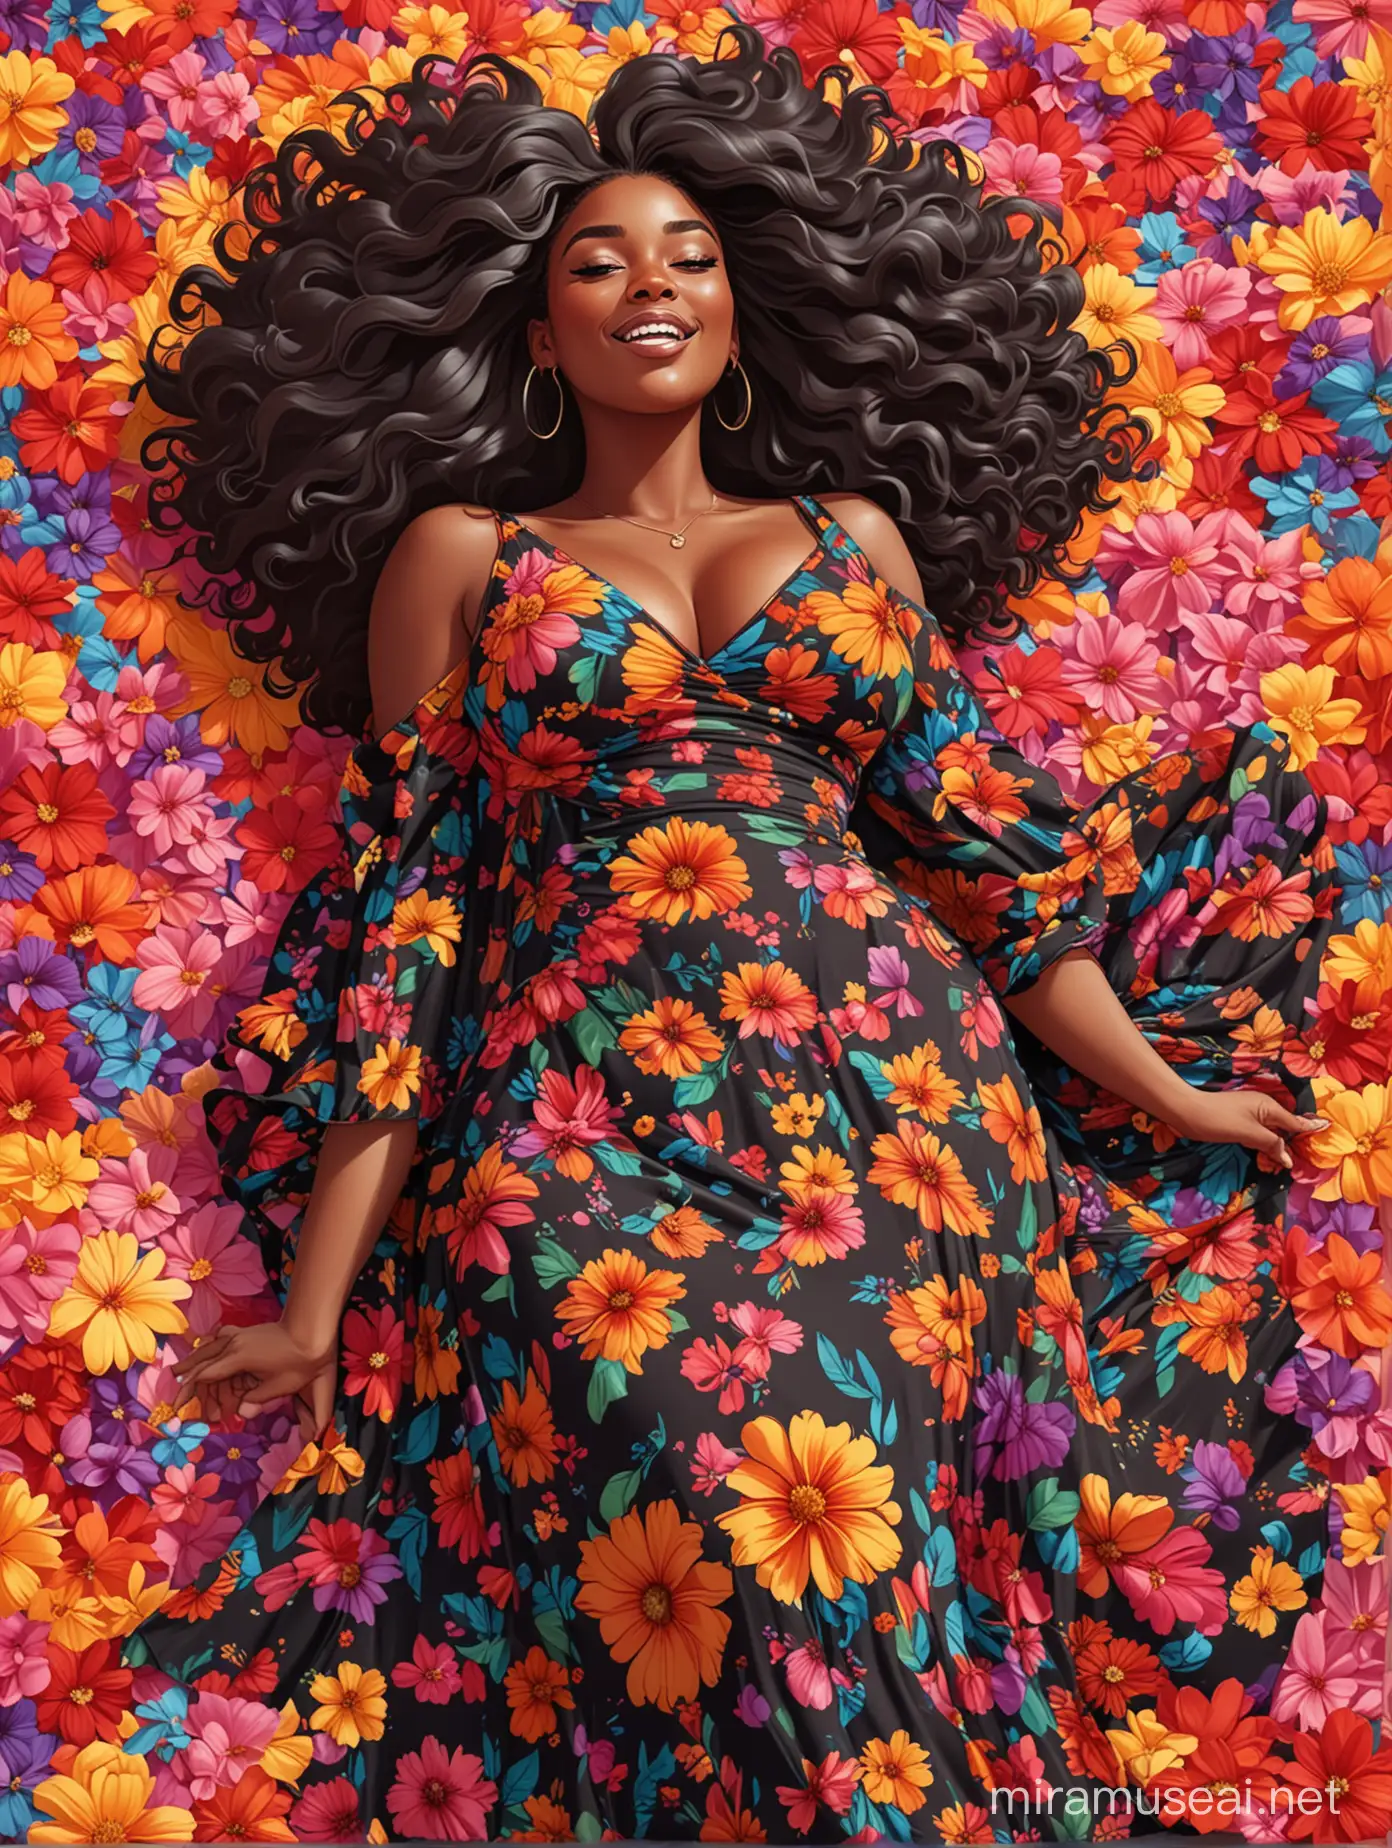 Confident Cartoon Black Woman Relaxing Among Vibrant Flower Petals